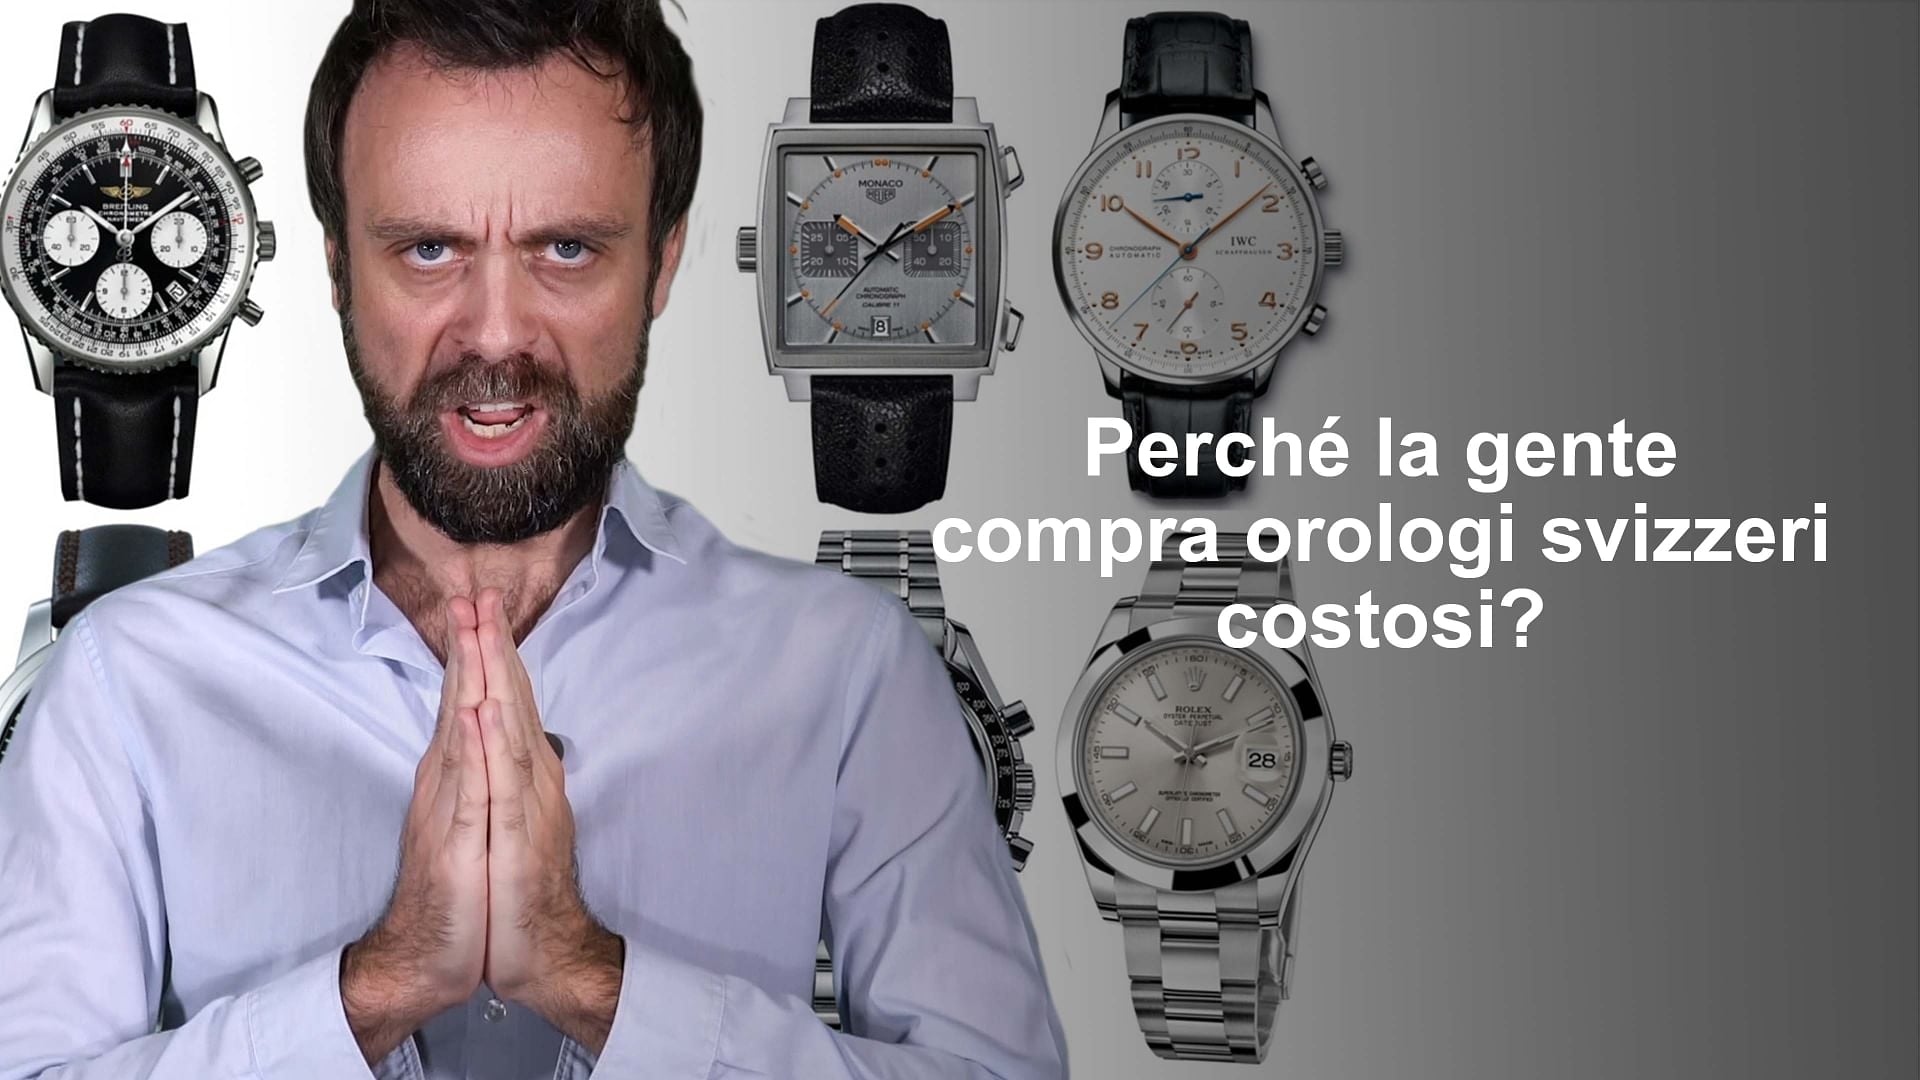 Svizzera? - Perché la gente compra orologi svizzeri super costosi?